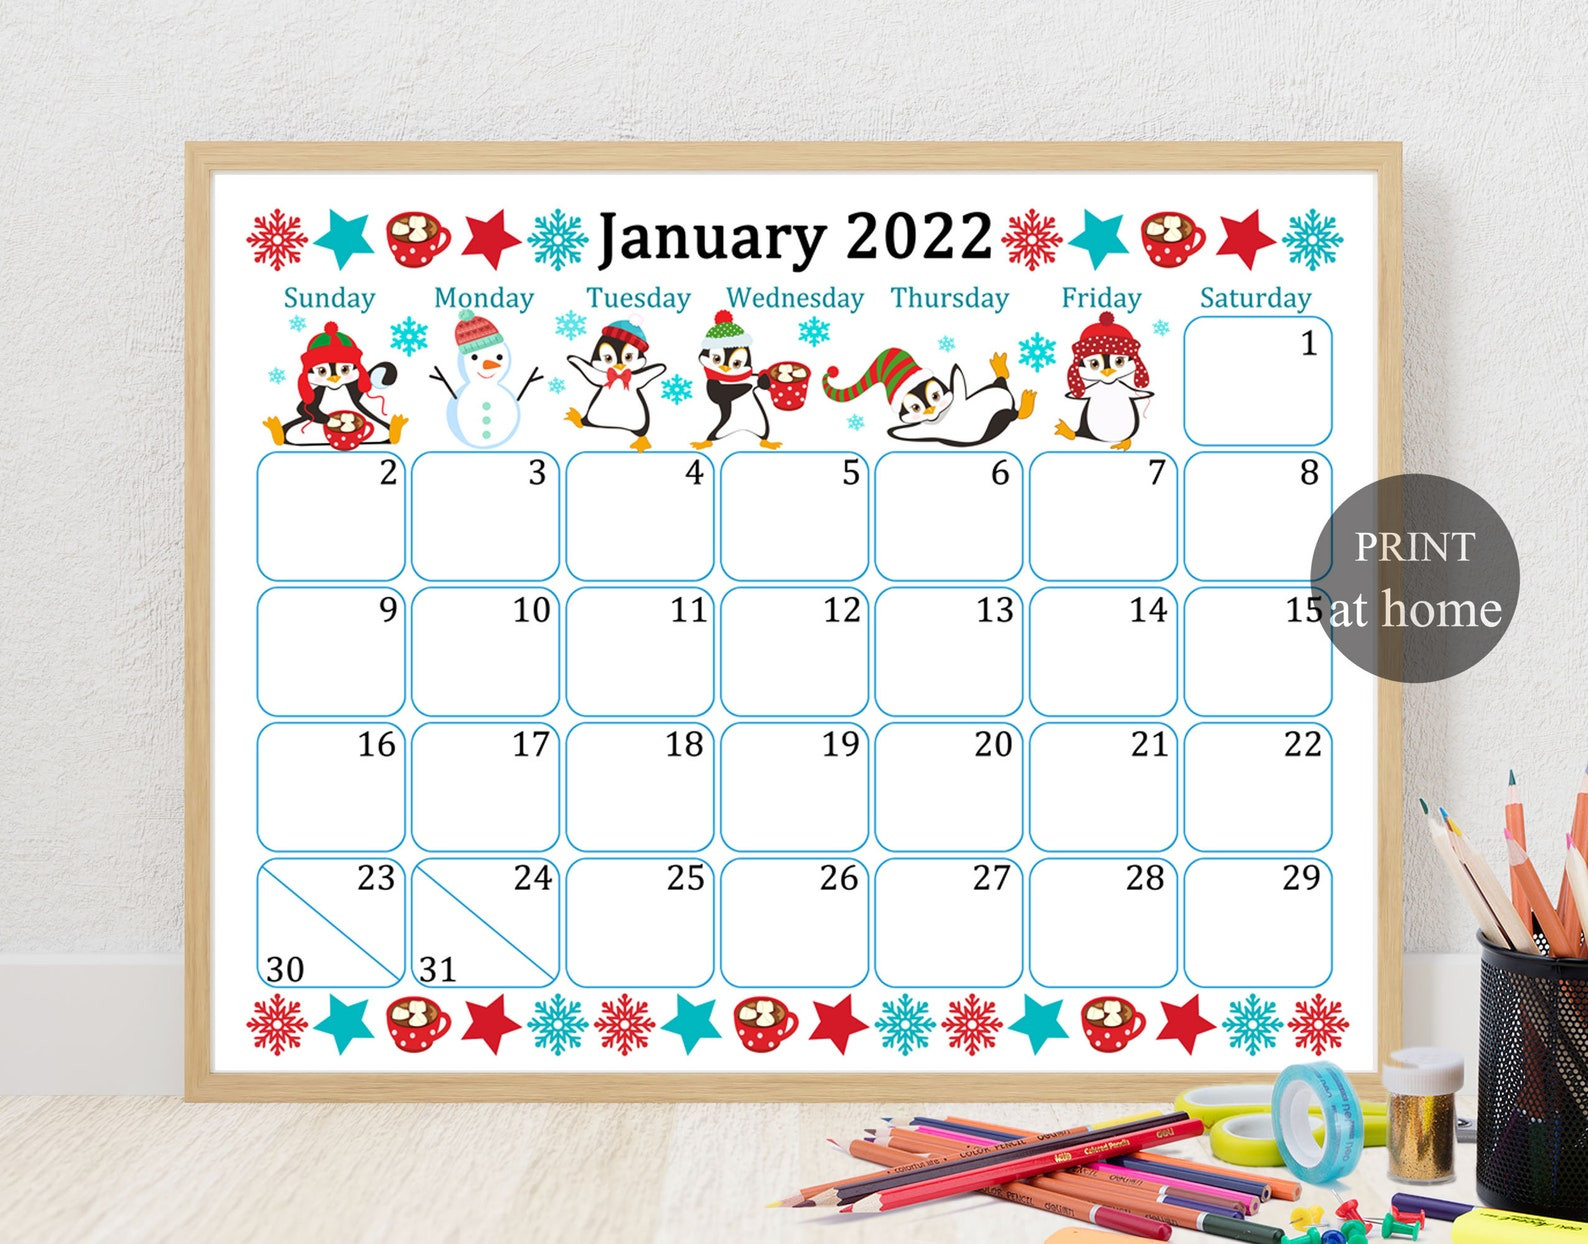 January 2022 Calendar Digital Download Monthly Calendar For | Etsy-Printable Monthly Calendar For 2022